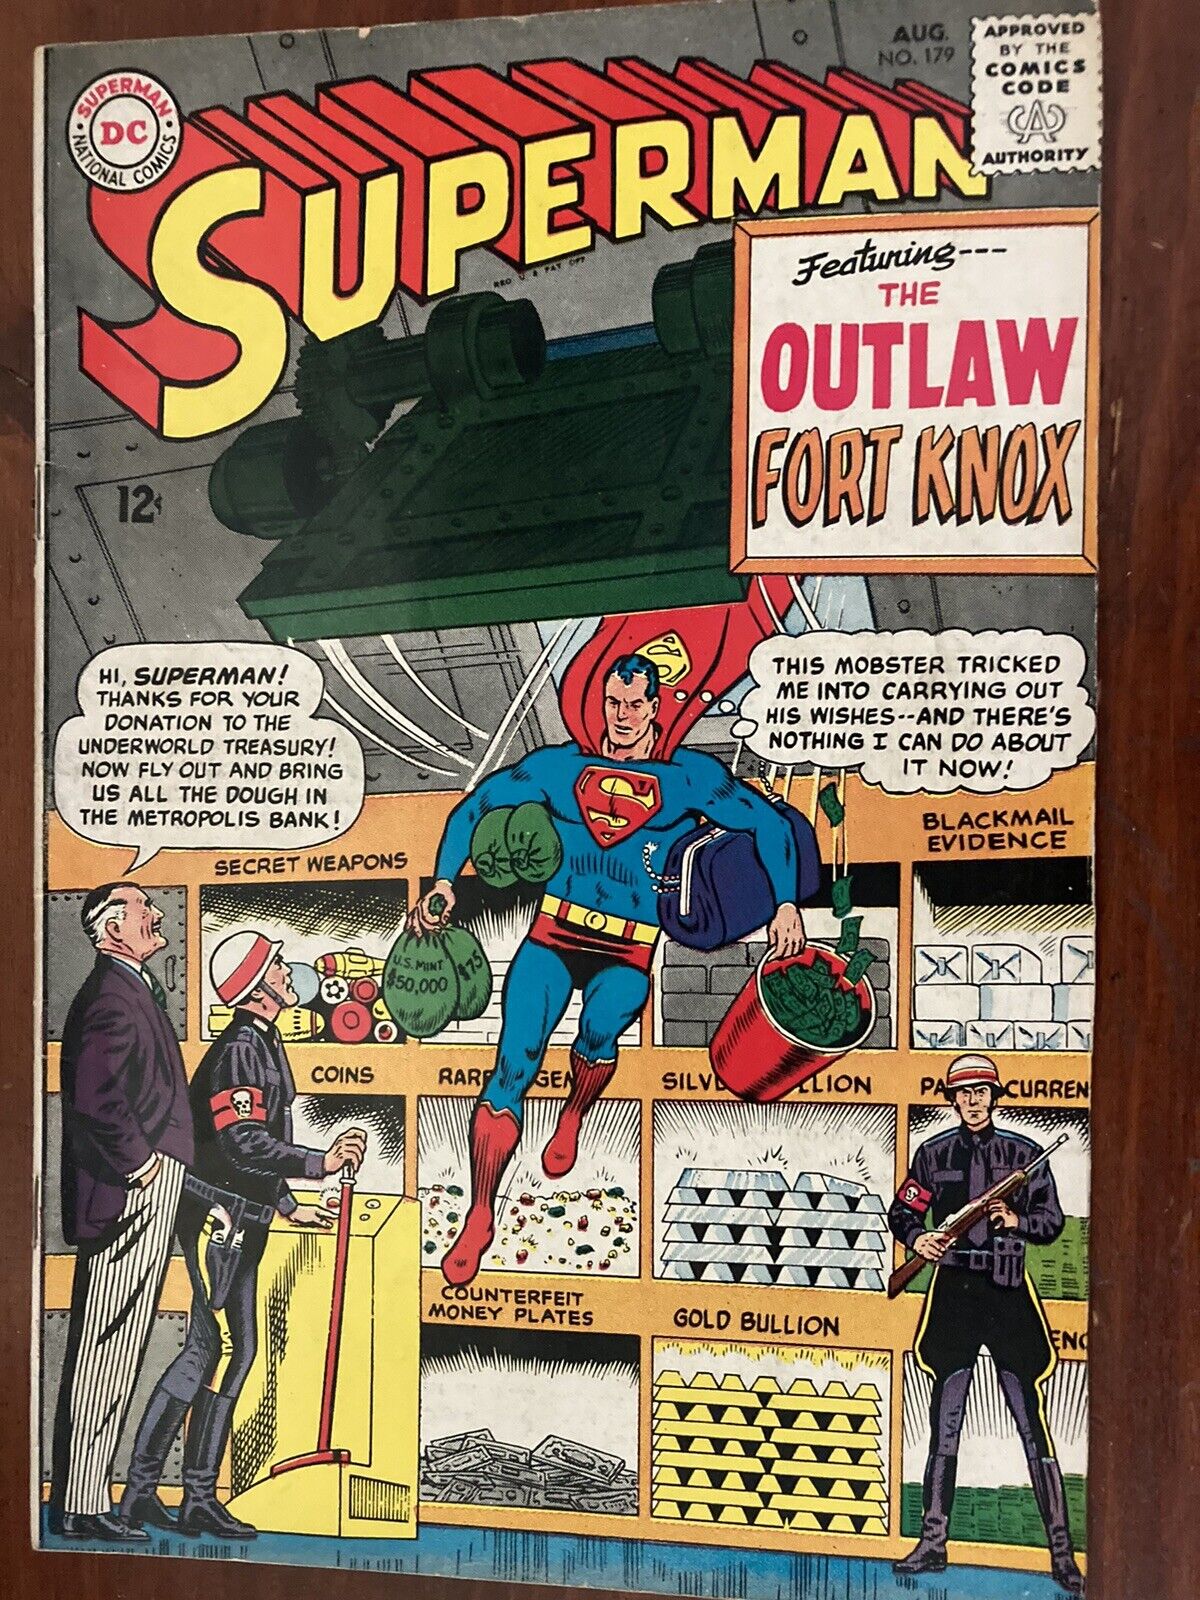 Superman # 179 August 1965